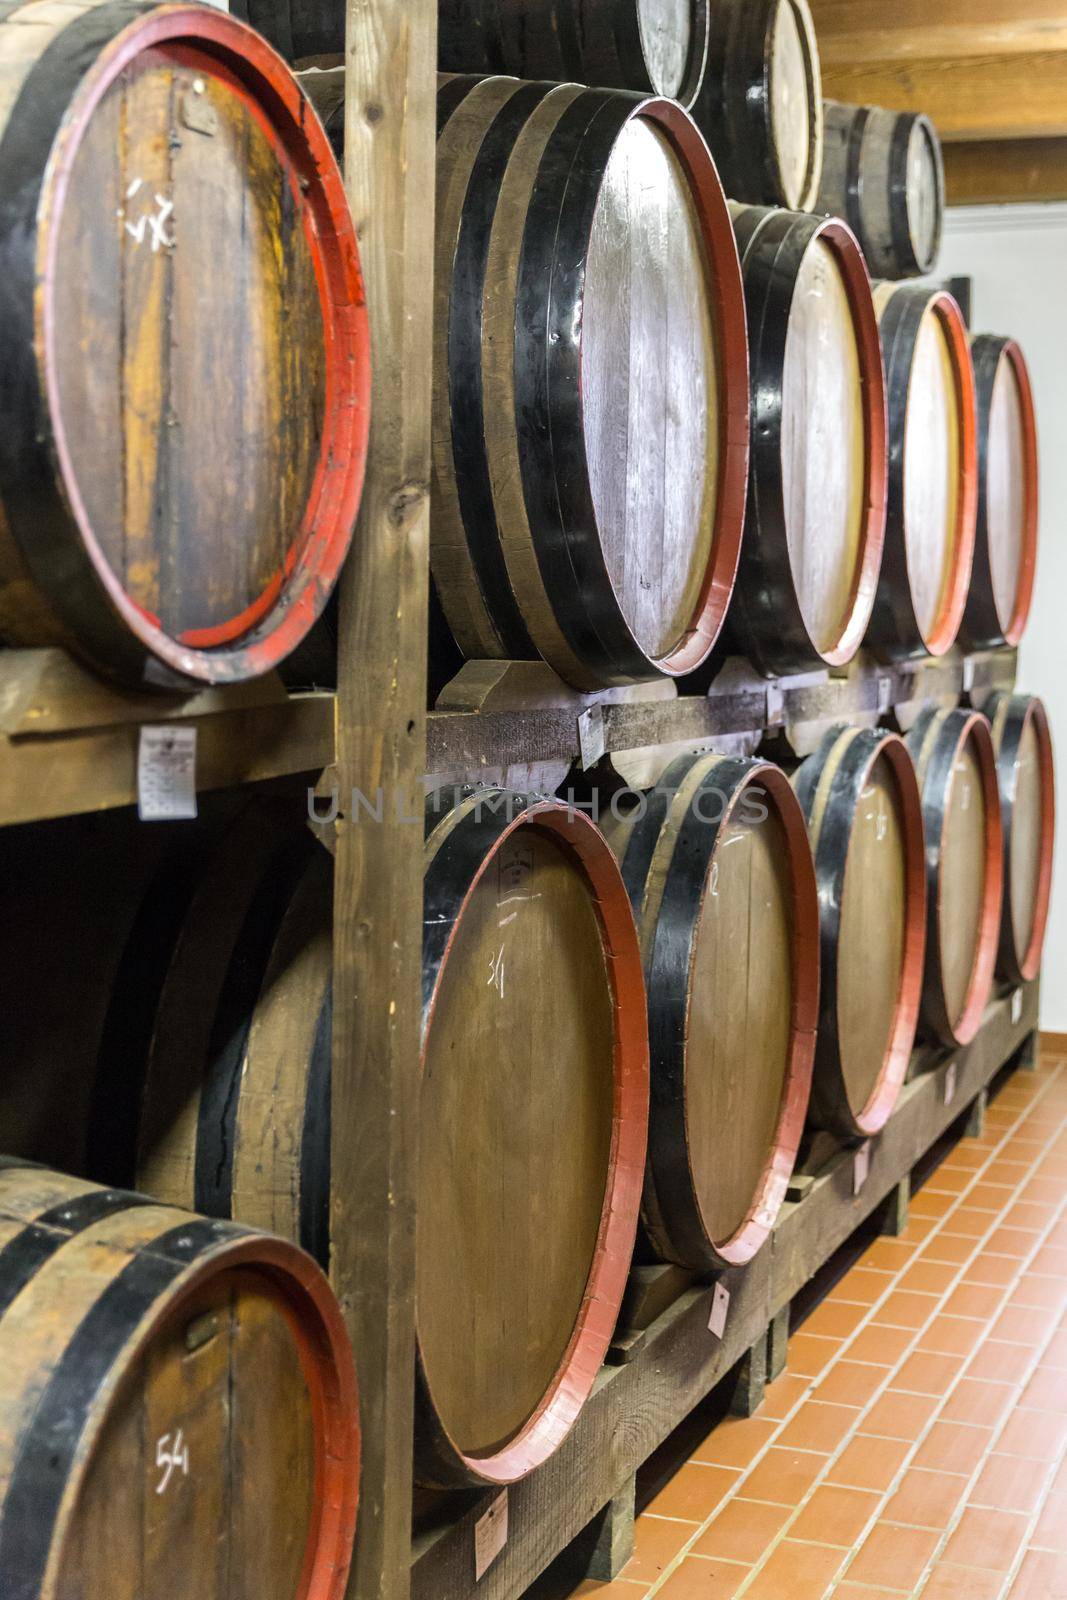 balsamic vinegar wooden barrels storing and aging by Mariakray